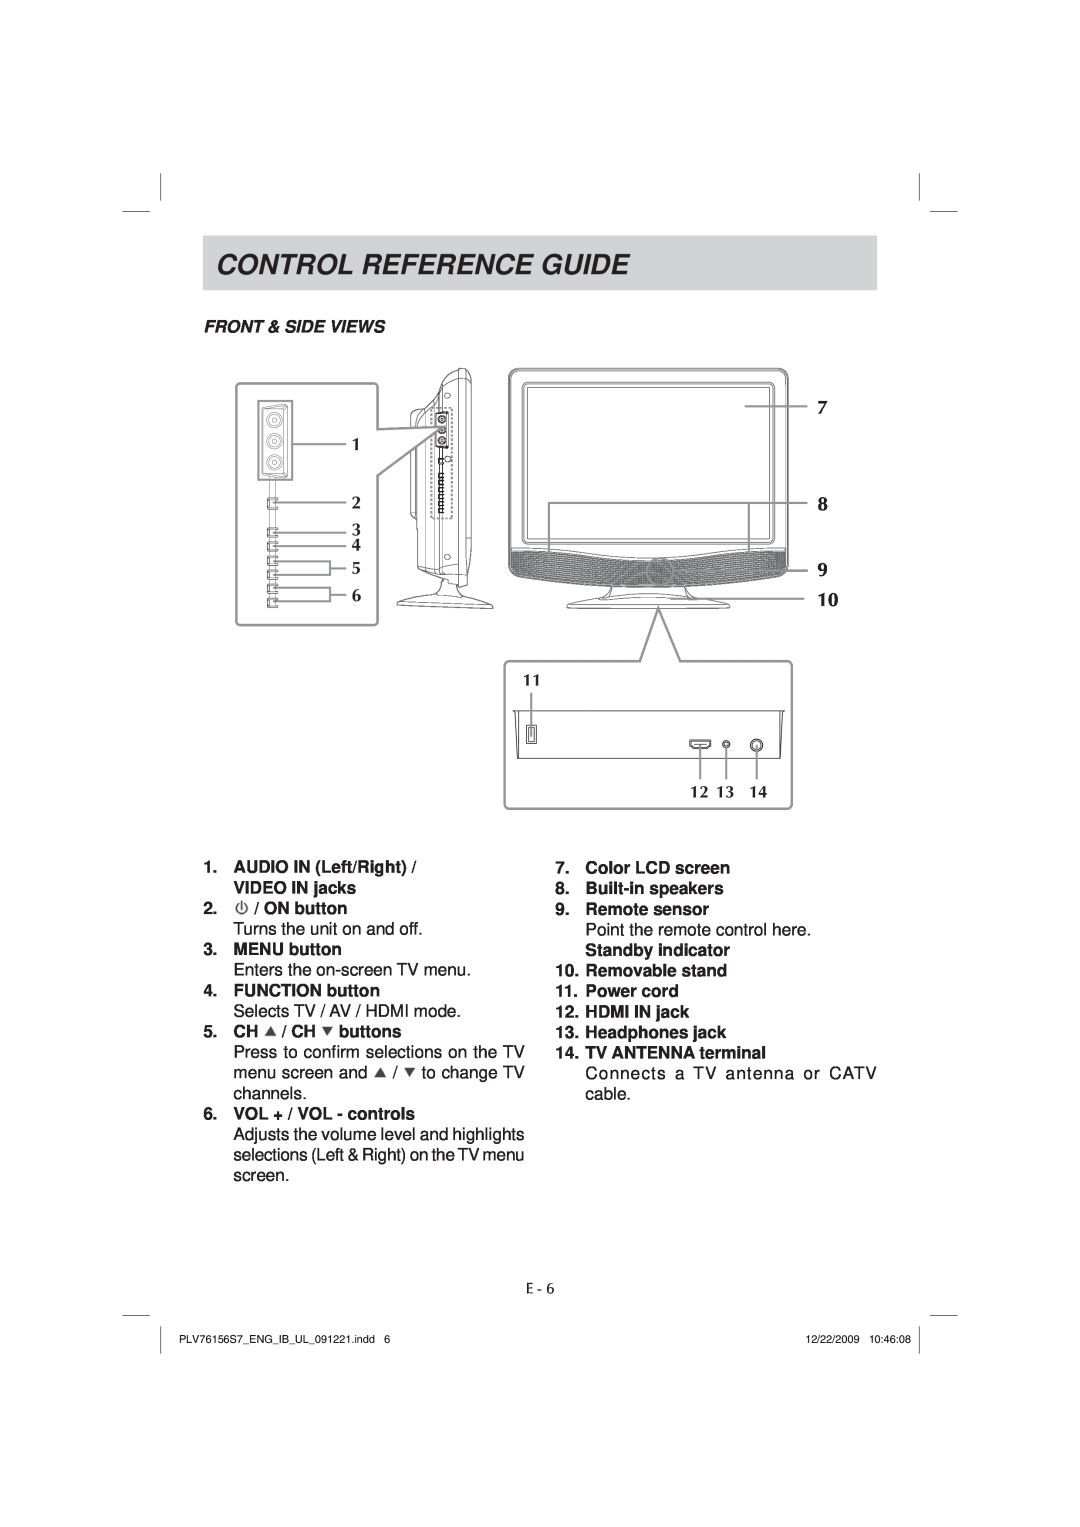 Venturer PLV7615H instruction manual Front & Side Views, Control Reference Guide 